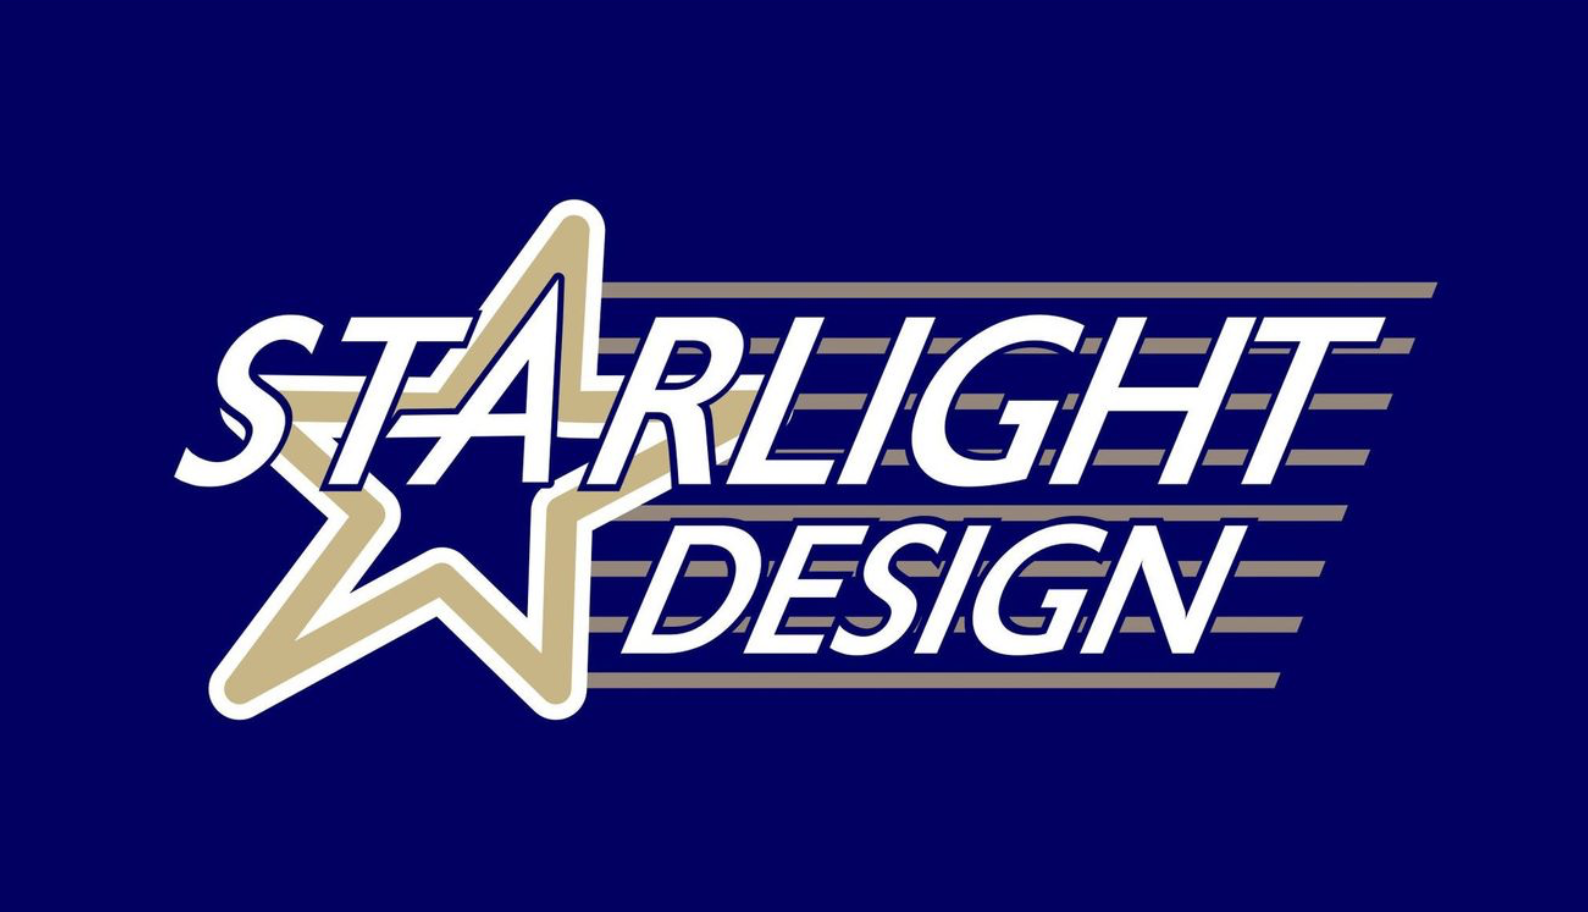 Starlight Design for Web